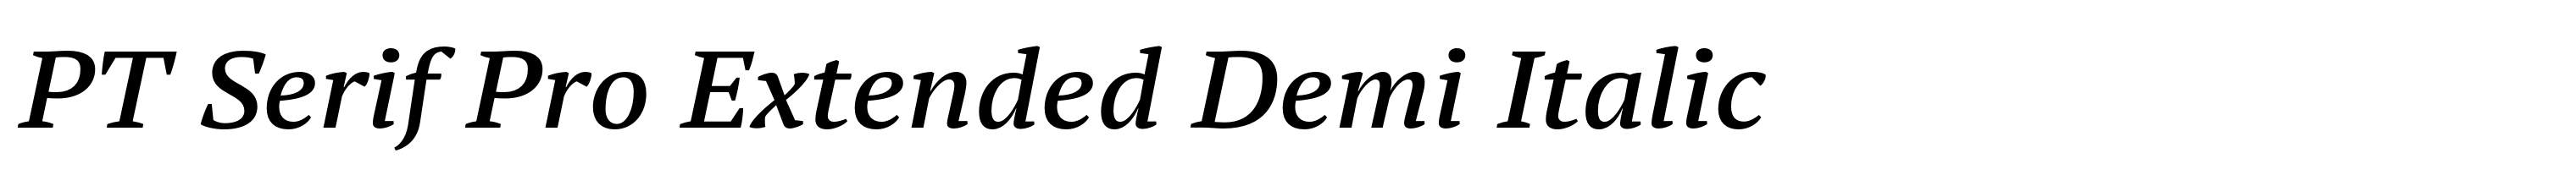 PT Serif Pro Extended Demi Italic